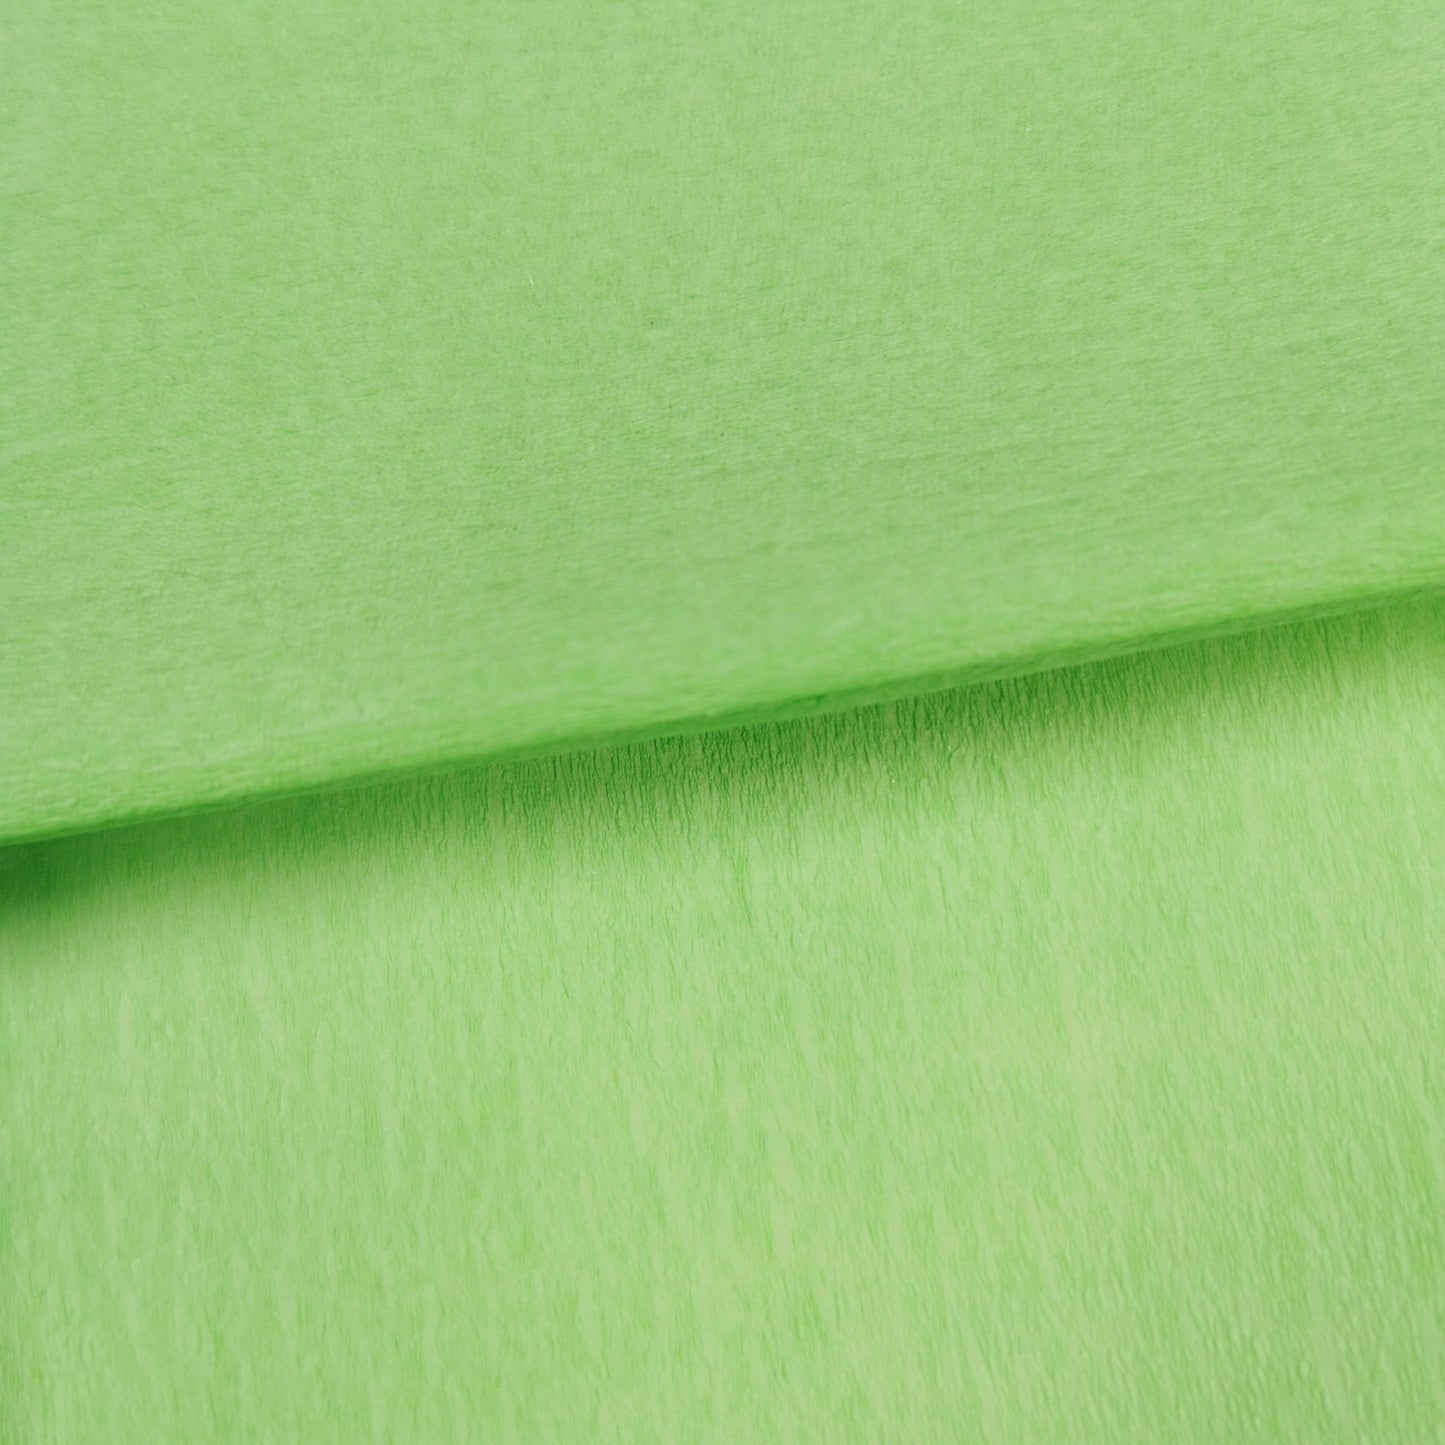 Crepe paper 3m 65% Stretch Light Green